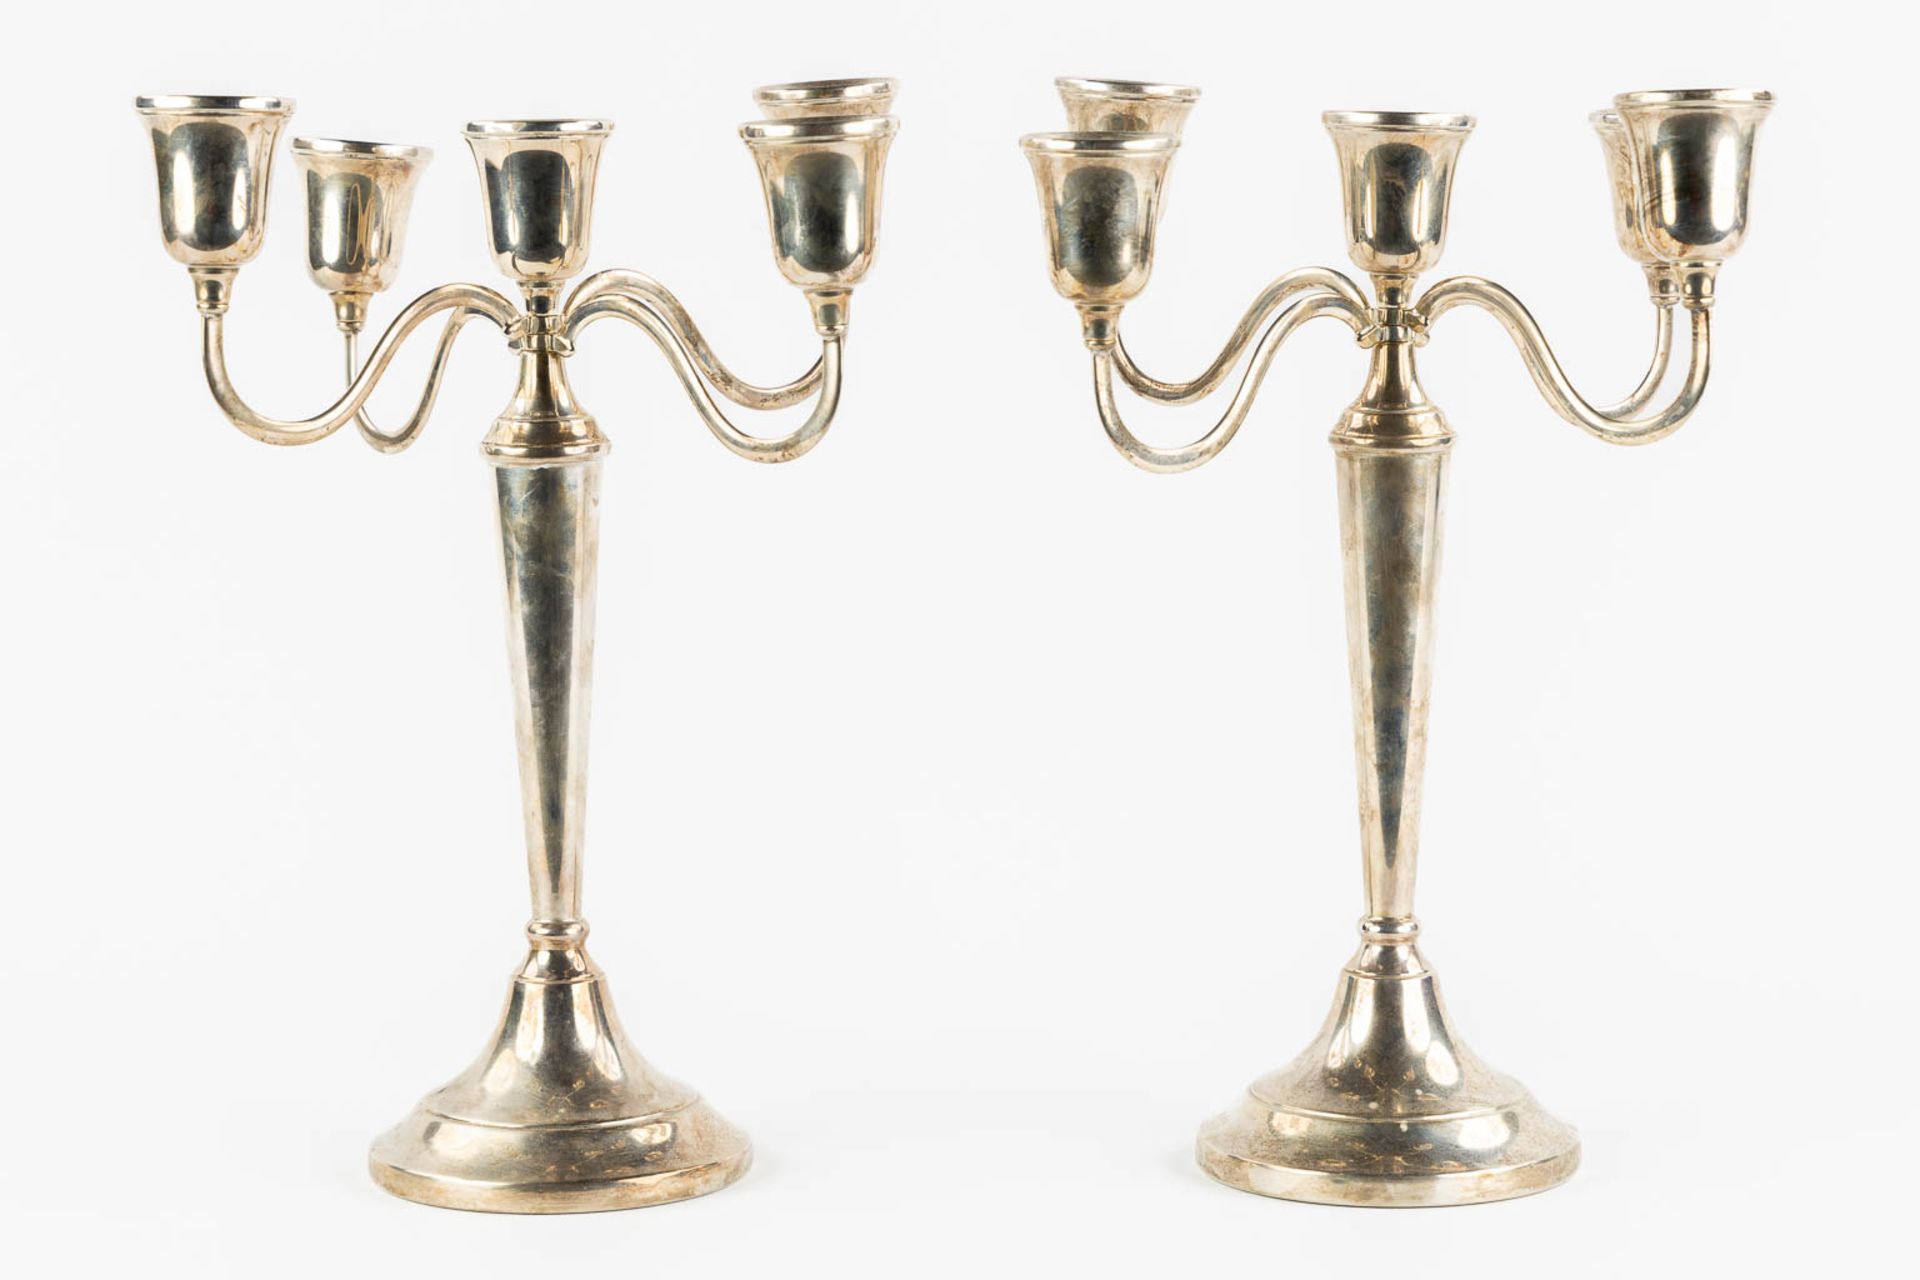 David Shaw Silverware Ltd, A pair of silver candelabra. 1992. (L:28 x W:28 x H:34 cm) - Image 6 of 12